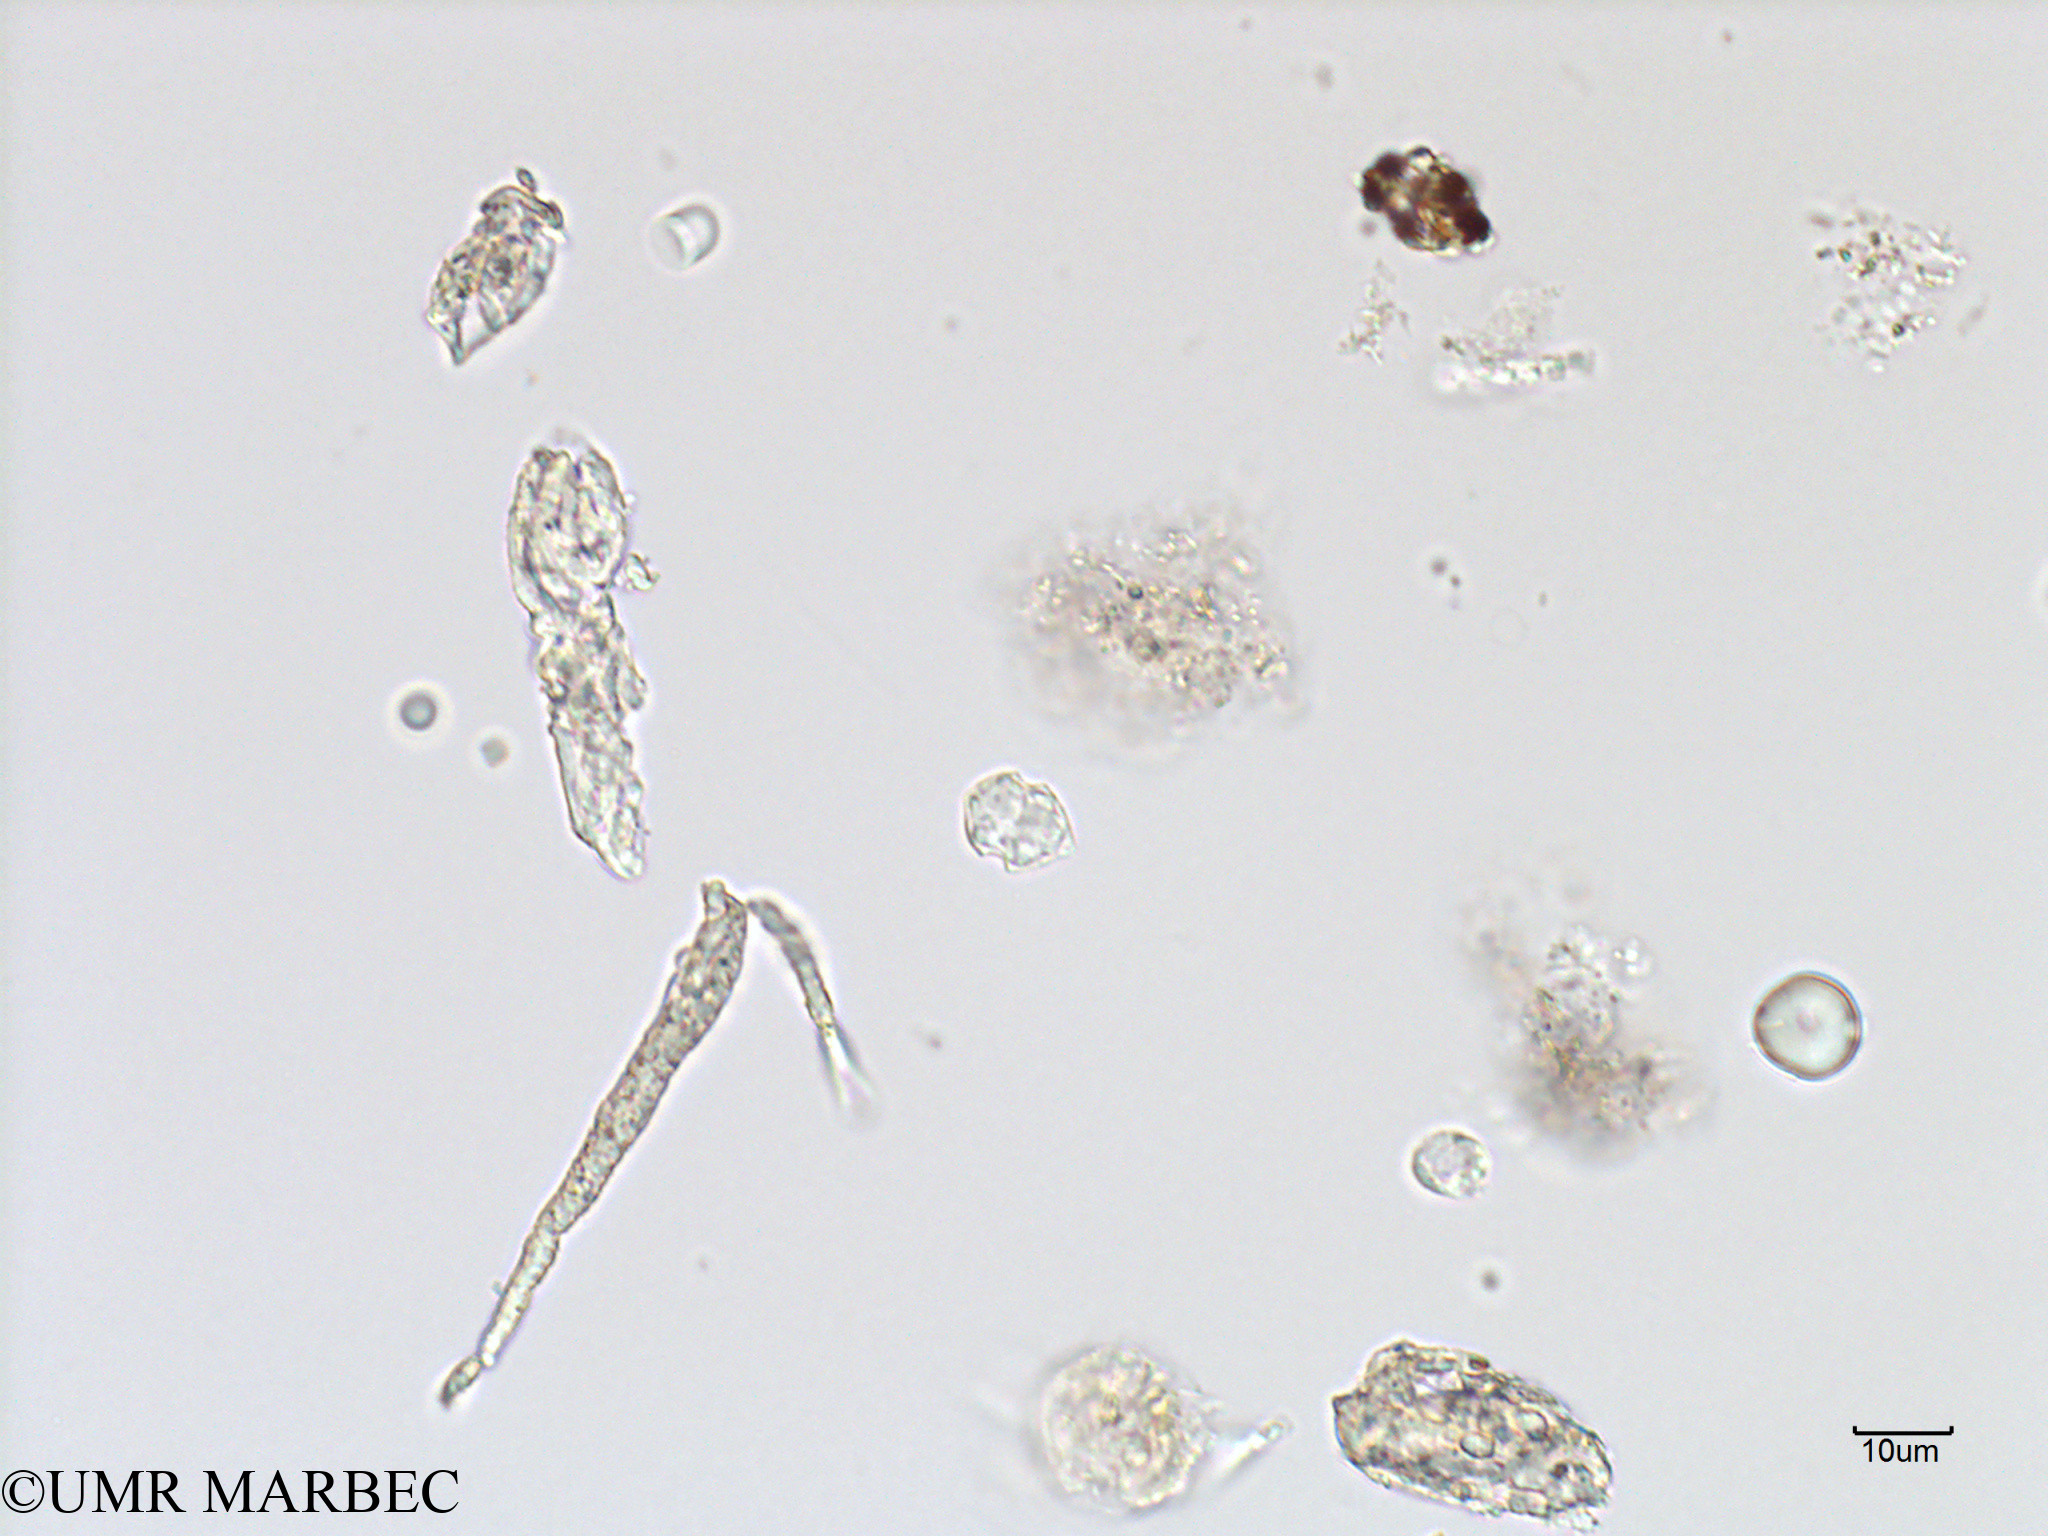 phyto/French_Polynesia/Arutua/ECOPE Janvier 2017/Scrippsiella spp (C1A_S2R2_050117_Scrippsiella-5).tif(copy).jpg